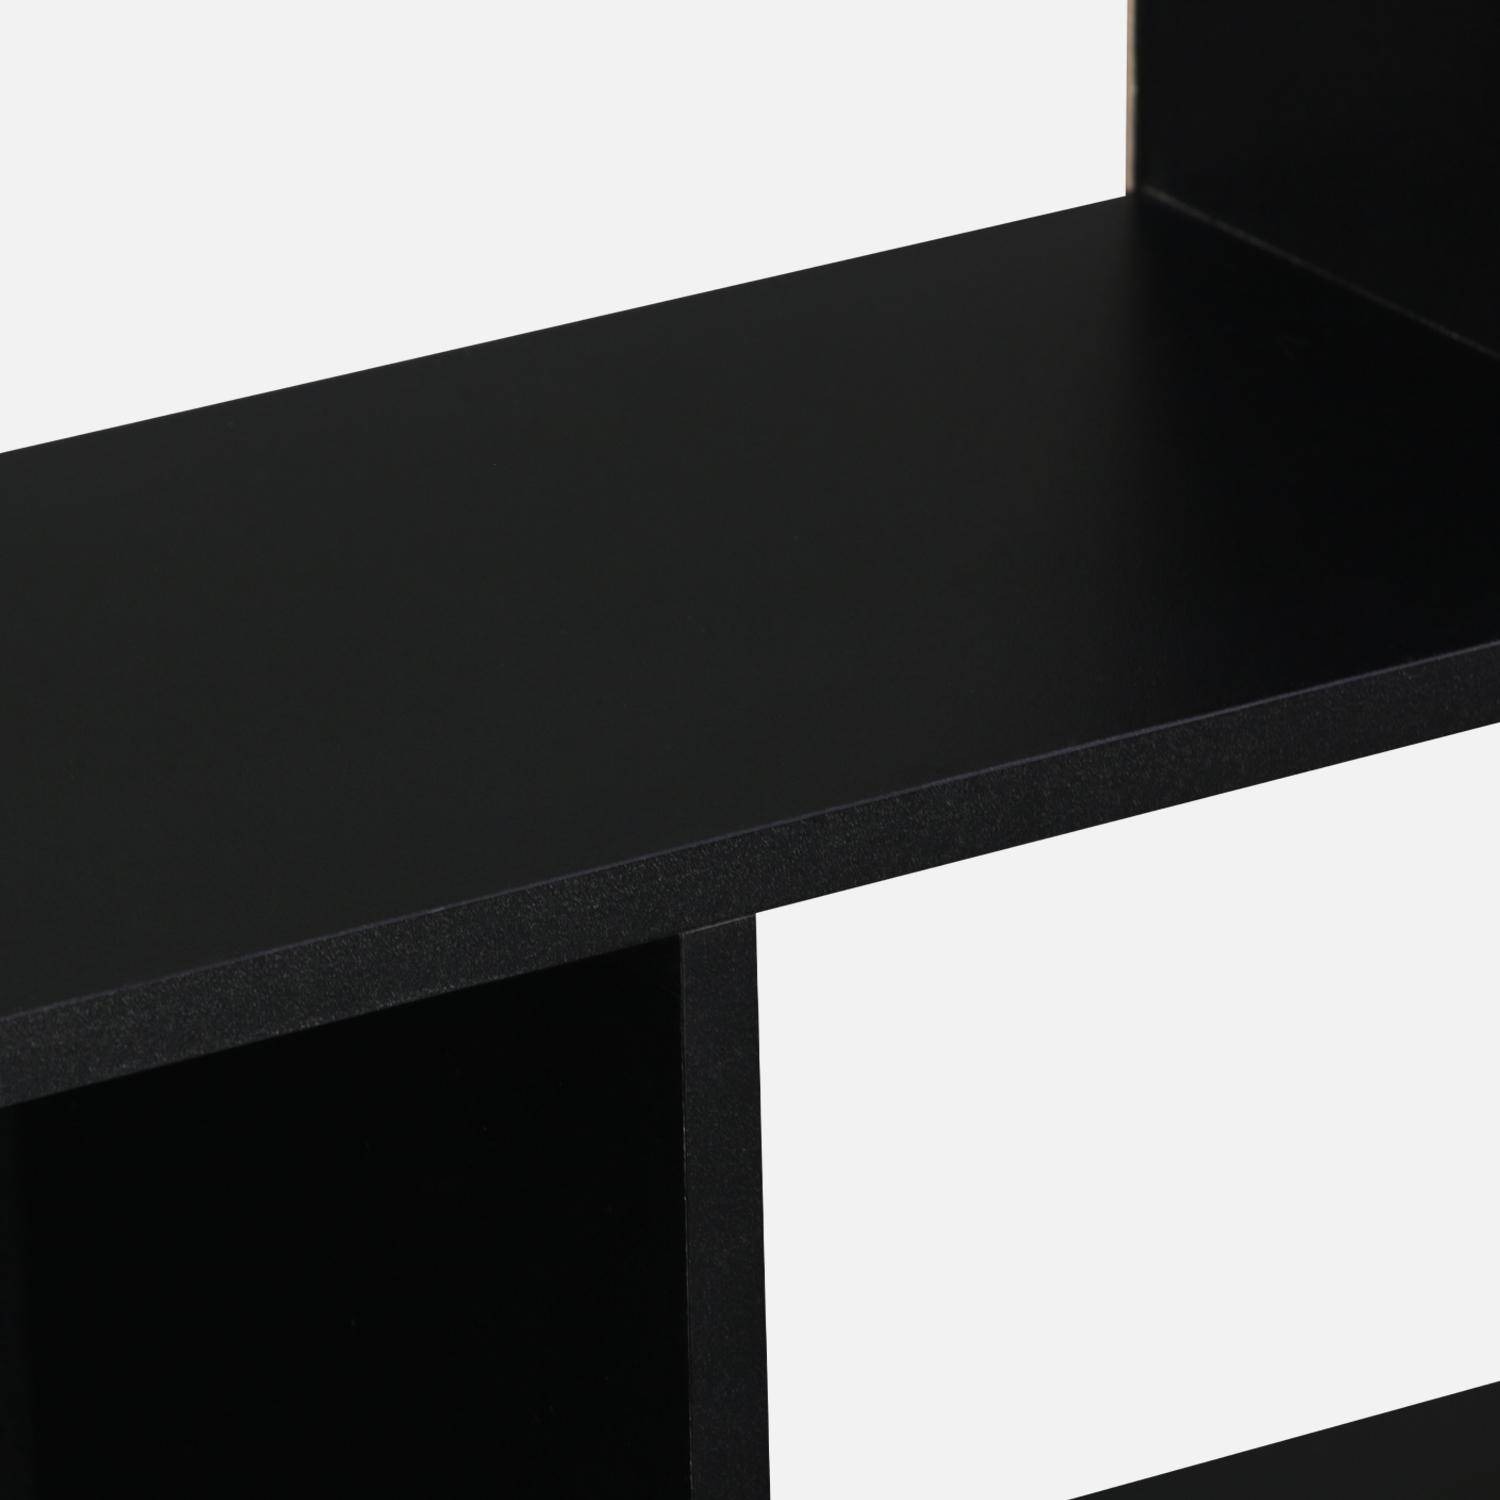 3-shelf bookcase with 6 compartments, black,  L83xW23xH80cm, Pieter,sweeek,Photo3